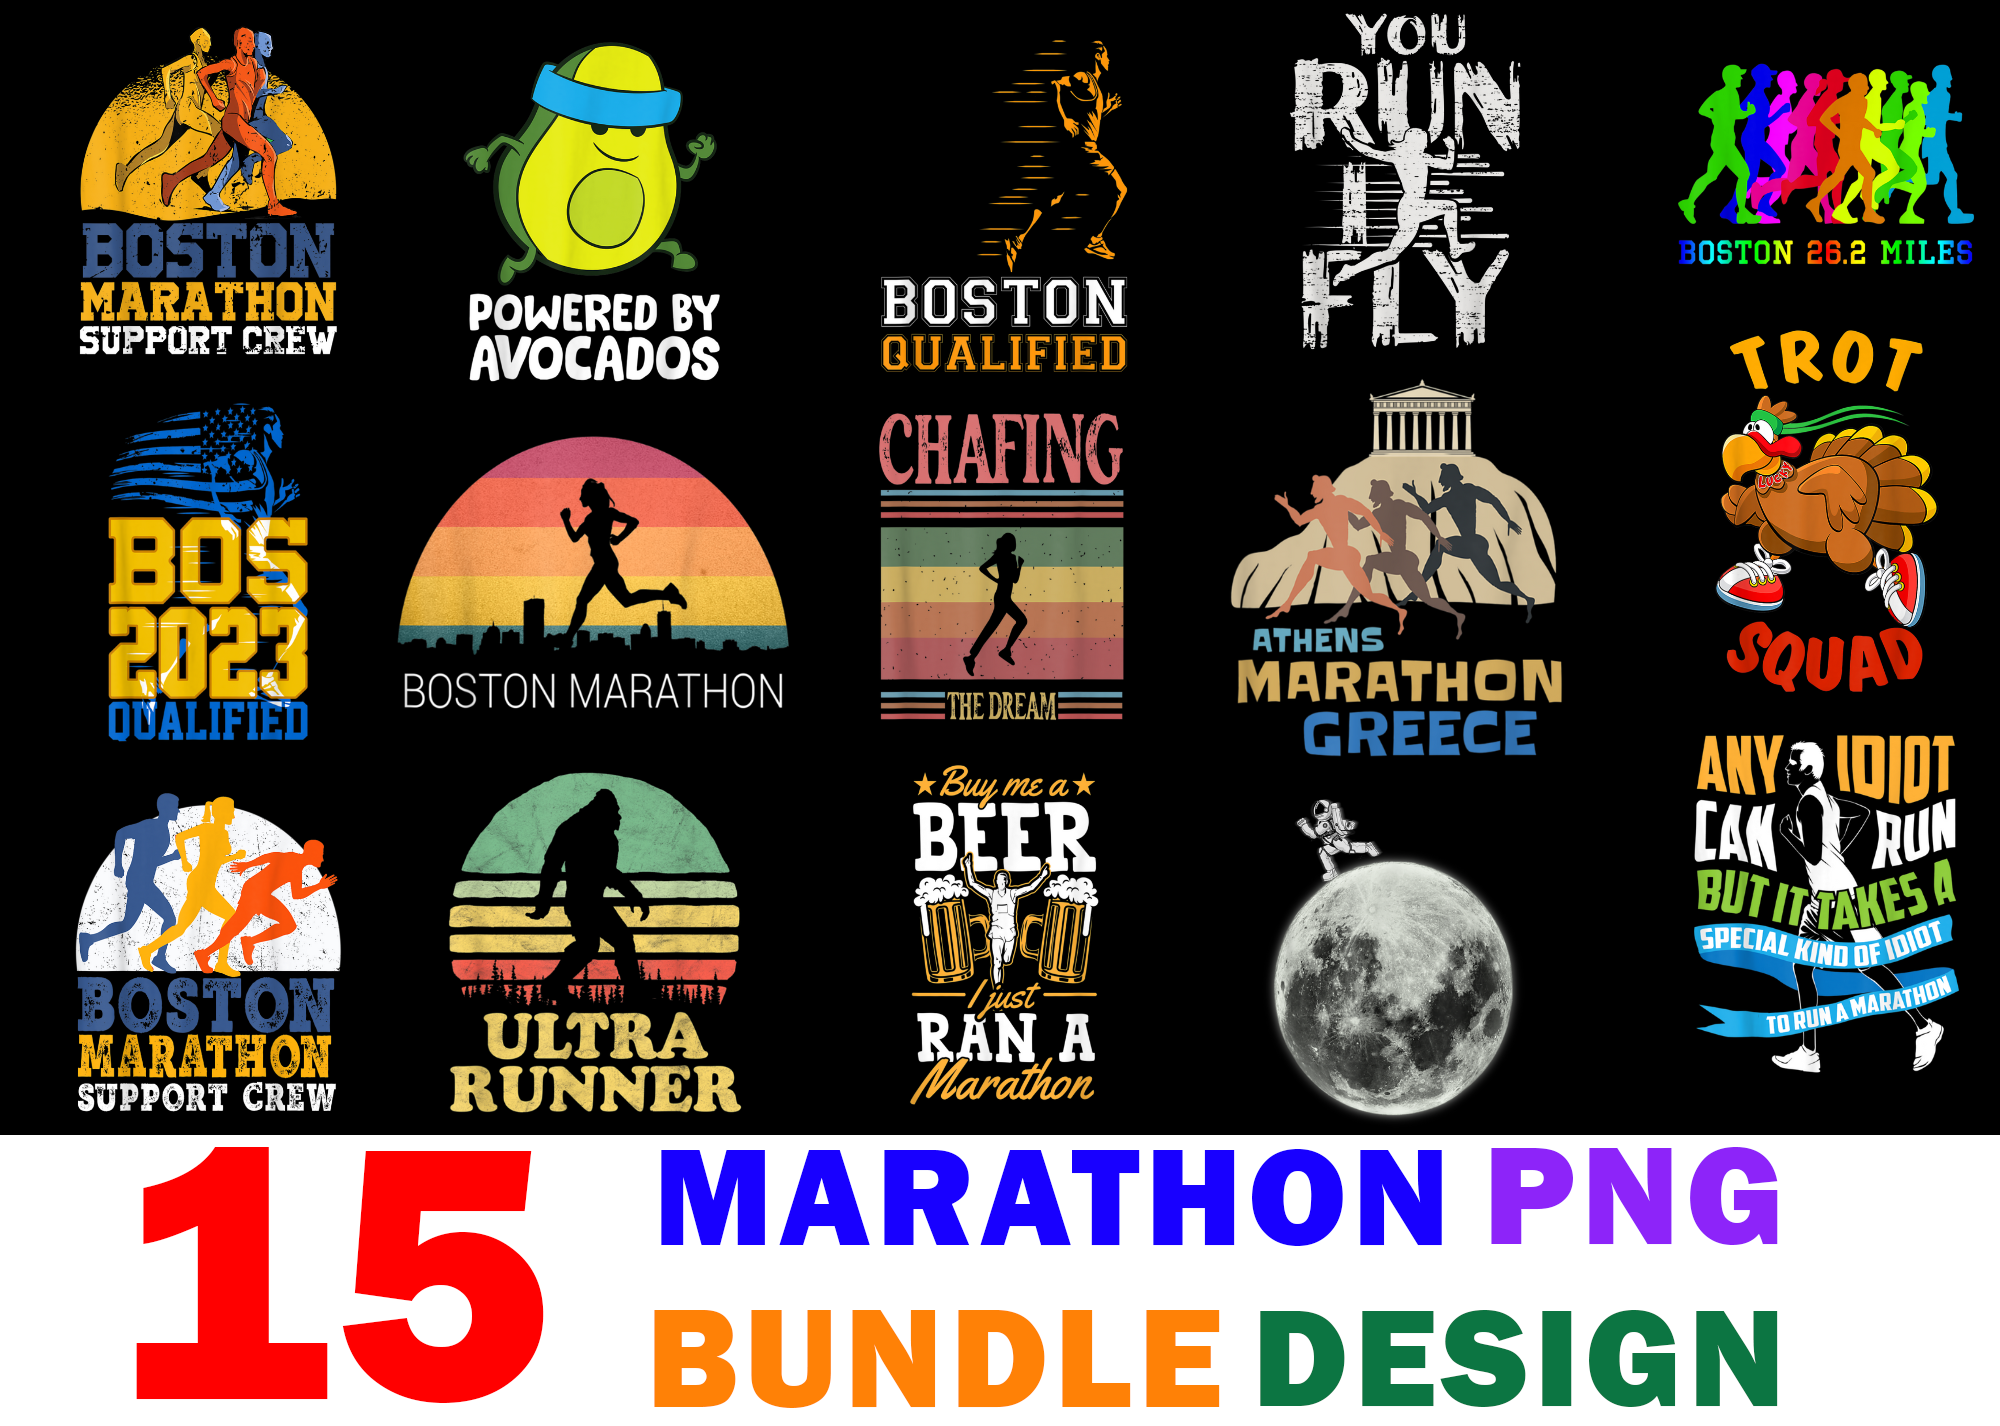 Boston Annual Marathon Runner 26.2 Miles Long Support Crew T-Shirt